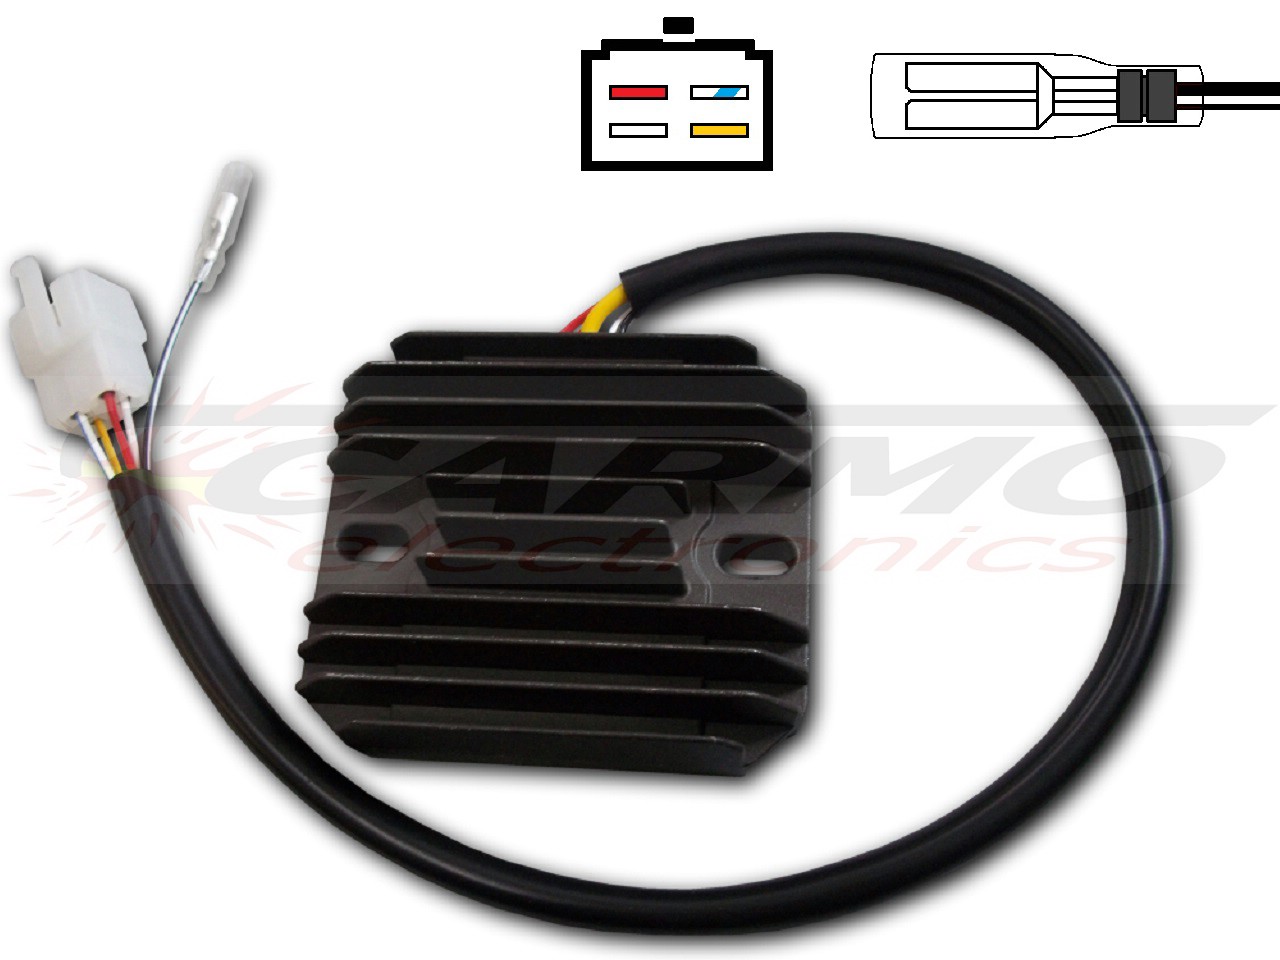 CARR111 - Suzuki MOSFET 電圧レギュレータ/整流器- (32800-24500 / 32800-24501 / 32800-43410) - 画像をクリックして閉じる